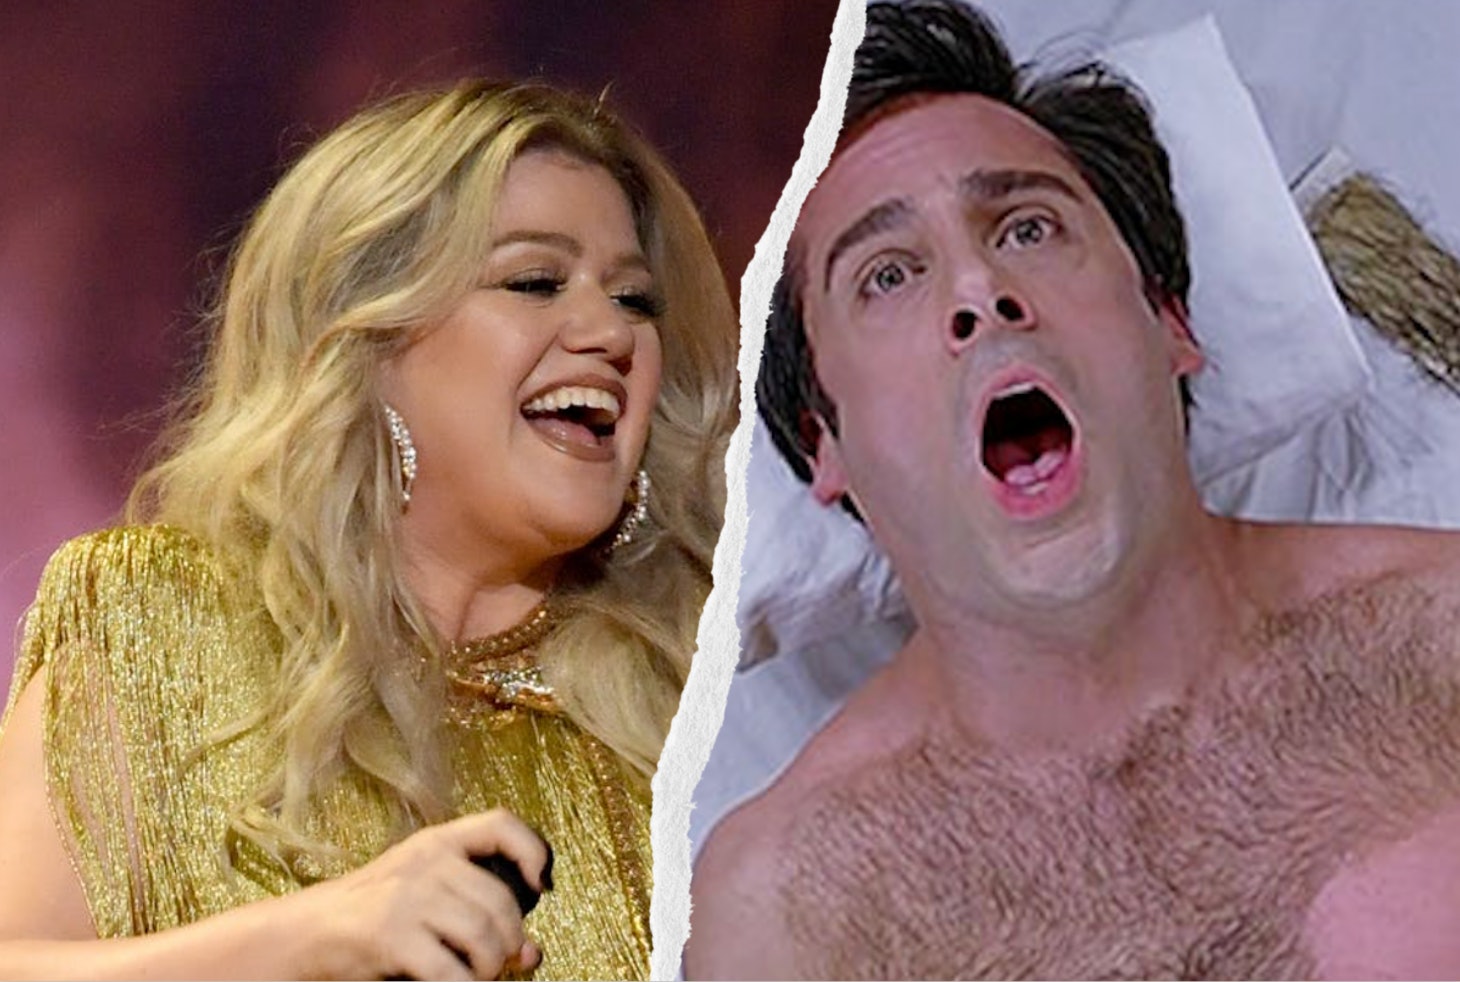 40 Year Old Virgin: Why Steve Carell Screams Kelly Clarkson's Name